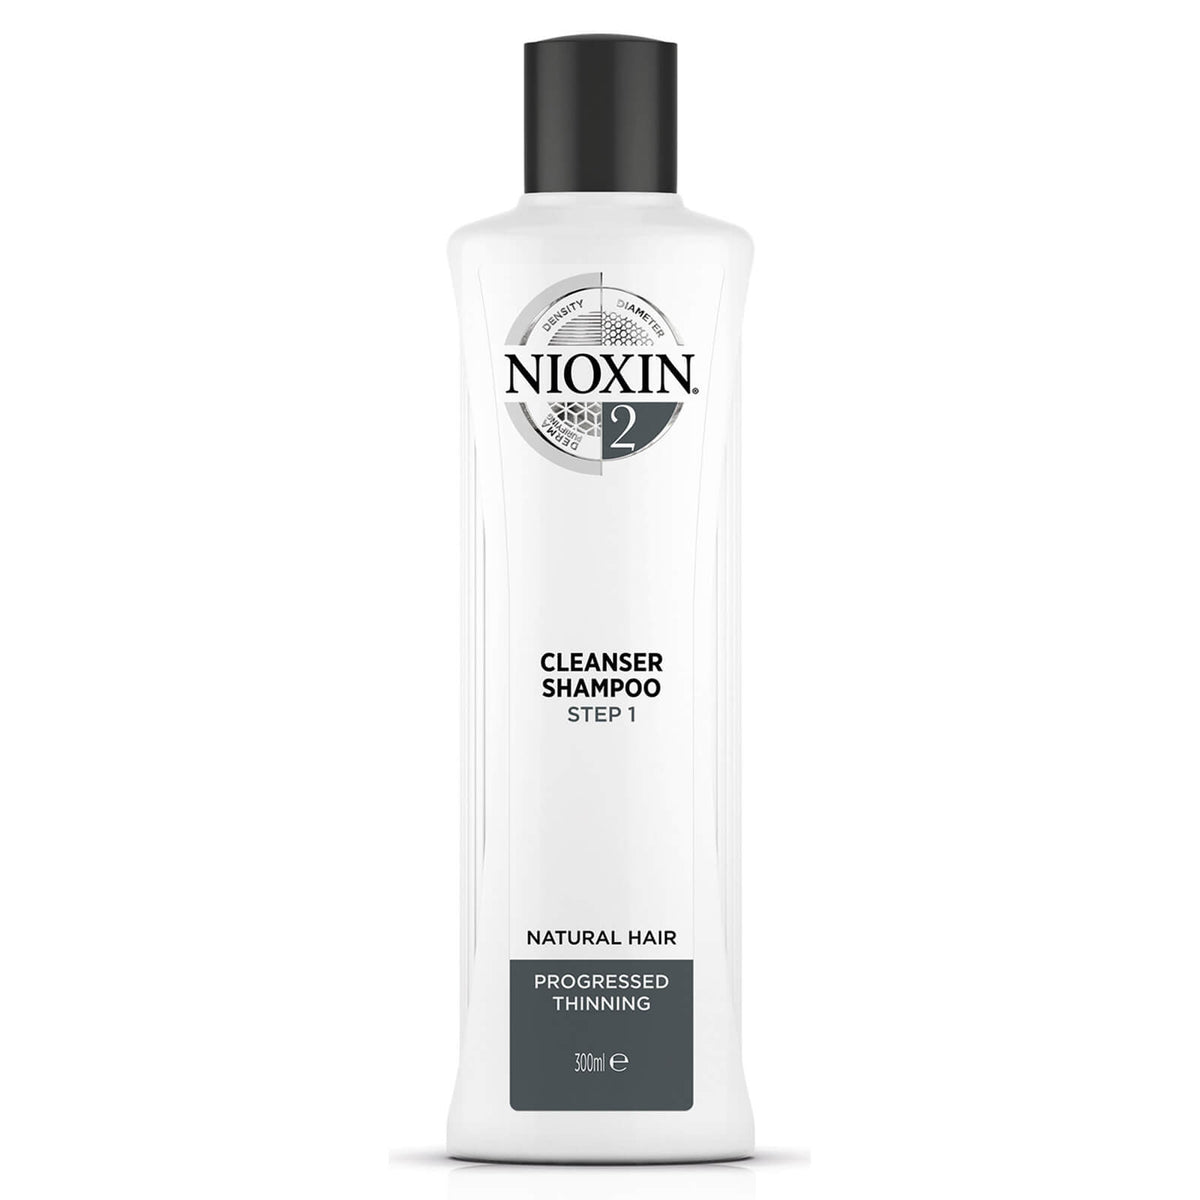 Nioxin 2 Cleanser Shampoo - Natural Hair Progressed Thinning